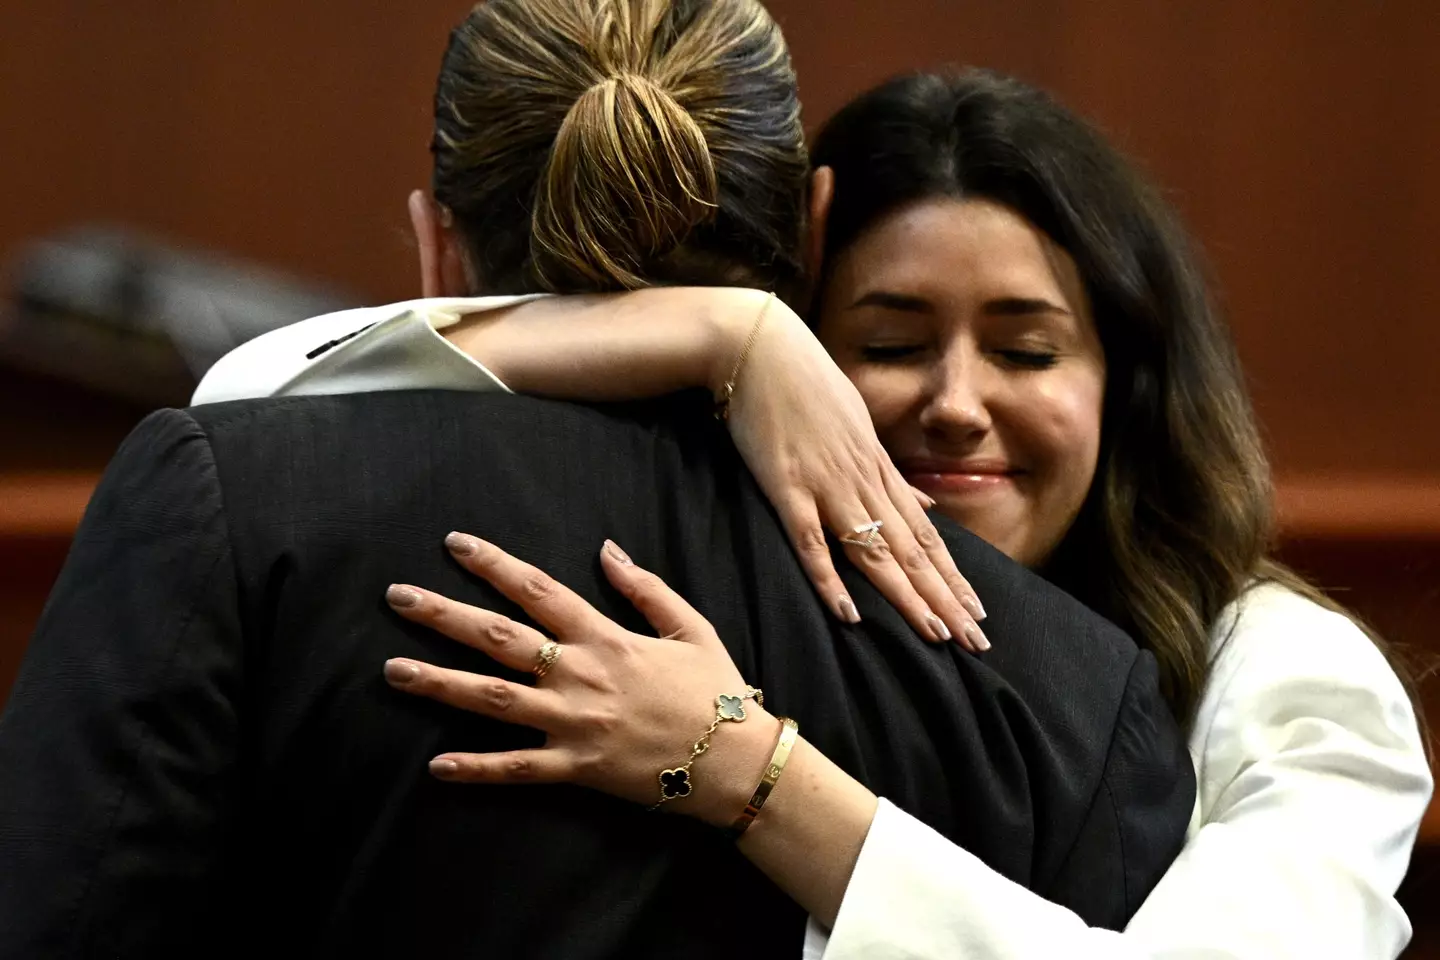 Camille Vasquez hugging Johnny Depp in the courtroom.